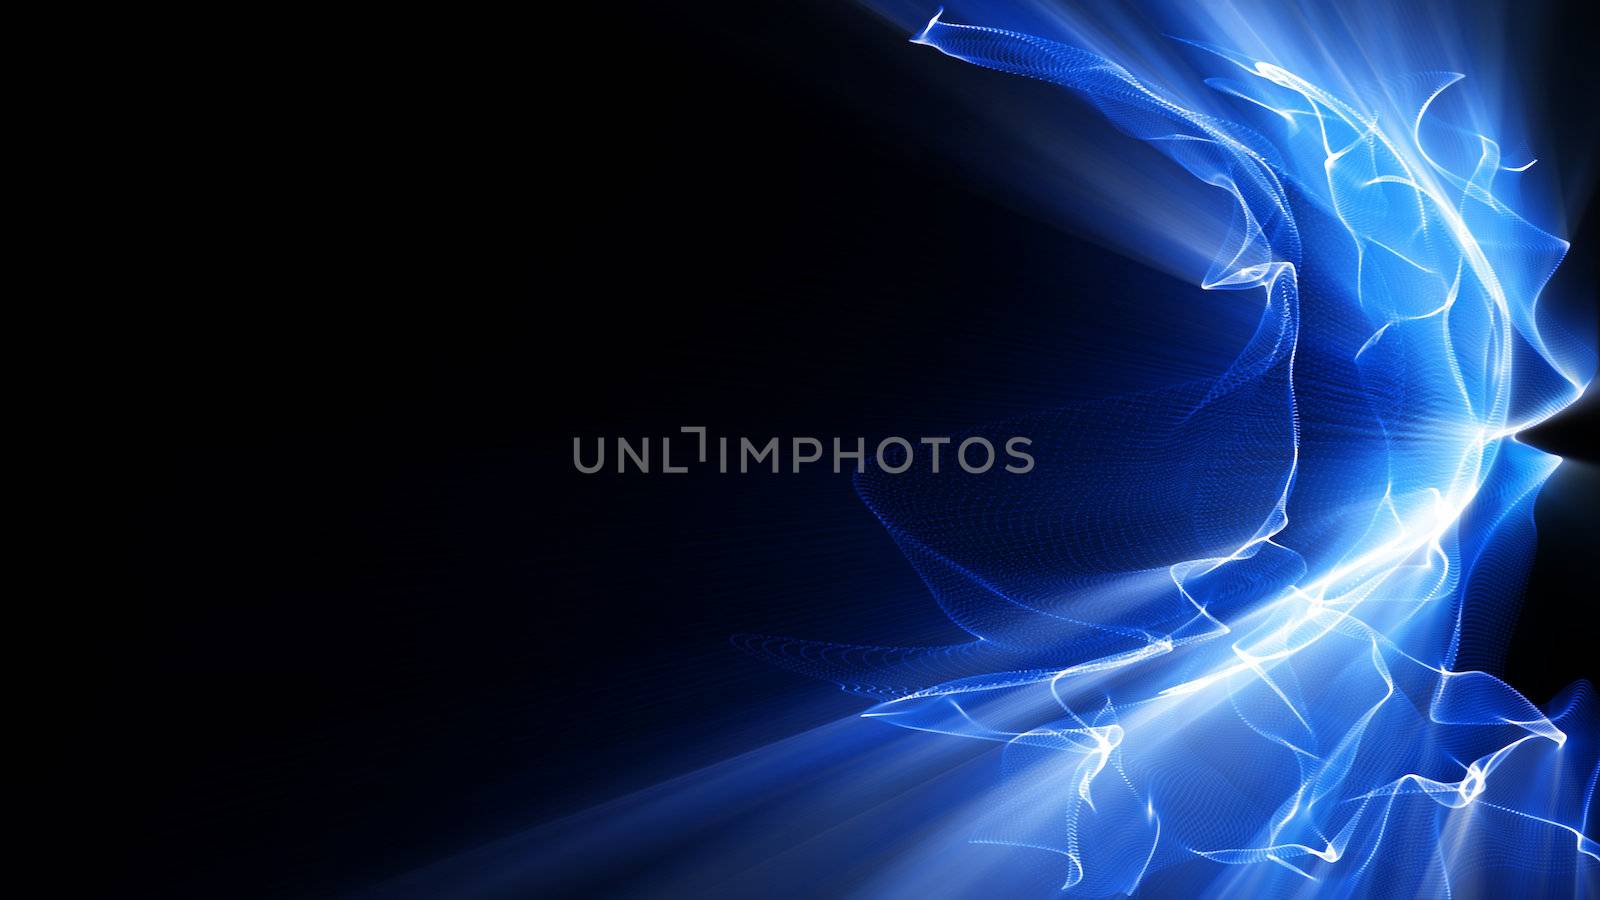 Light Effect 0392 - Waves of blue light undulate, ripple and shine.